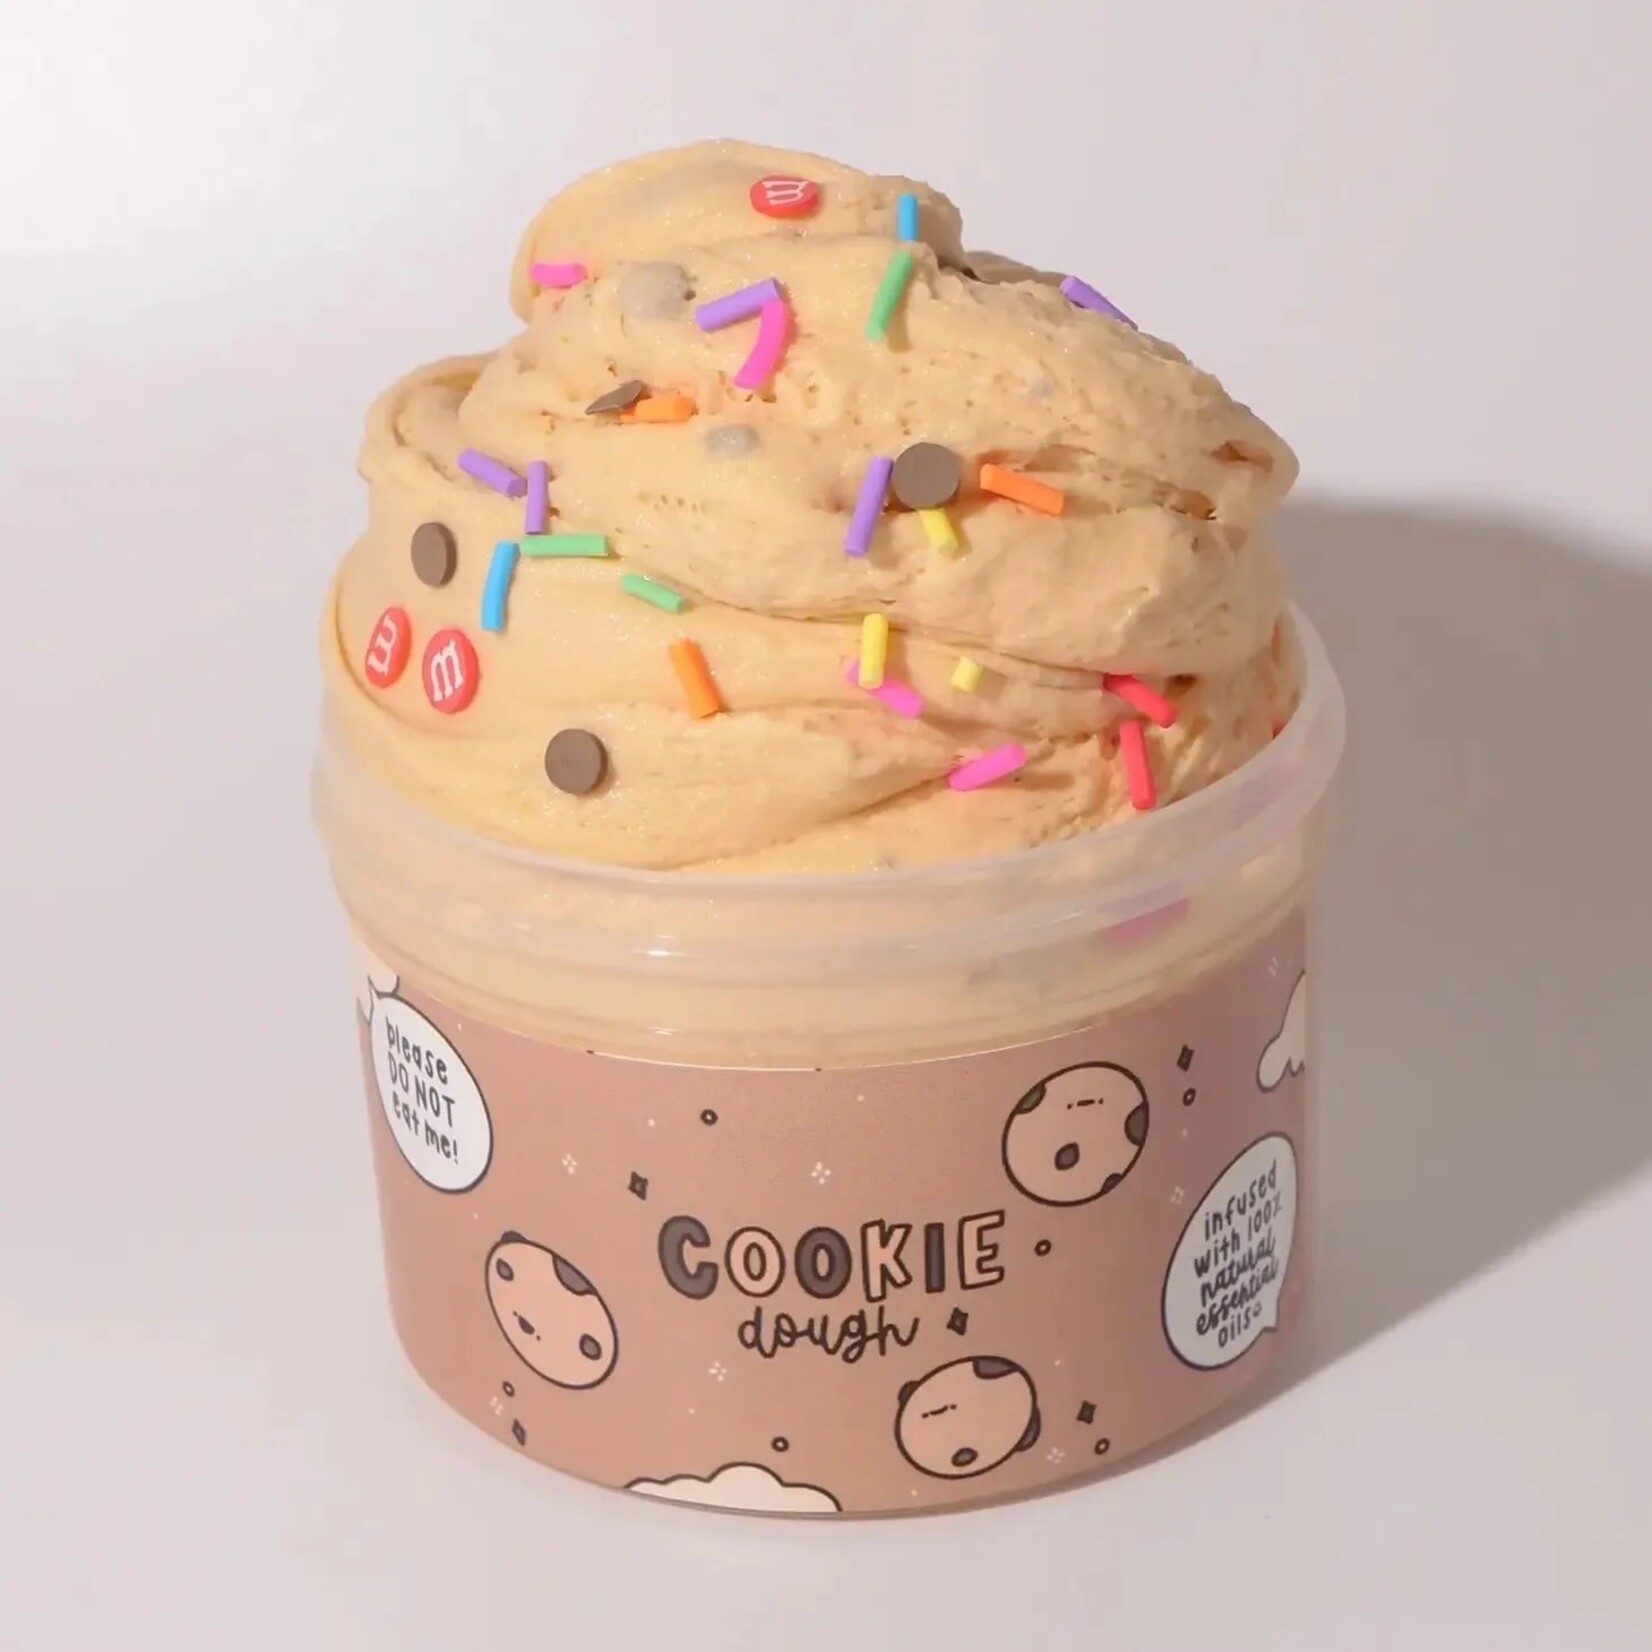 Sonria Slime SONRIA SLIME - Slime 'cloud cream' parfumée (7oz) - Cookie Dough